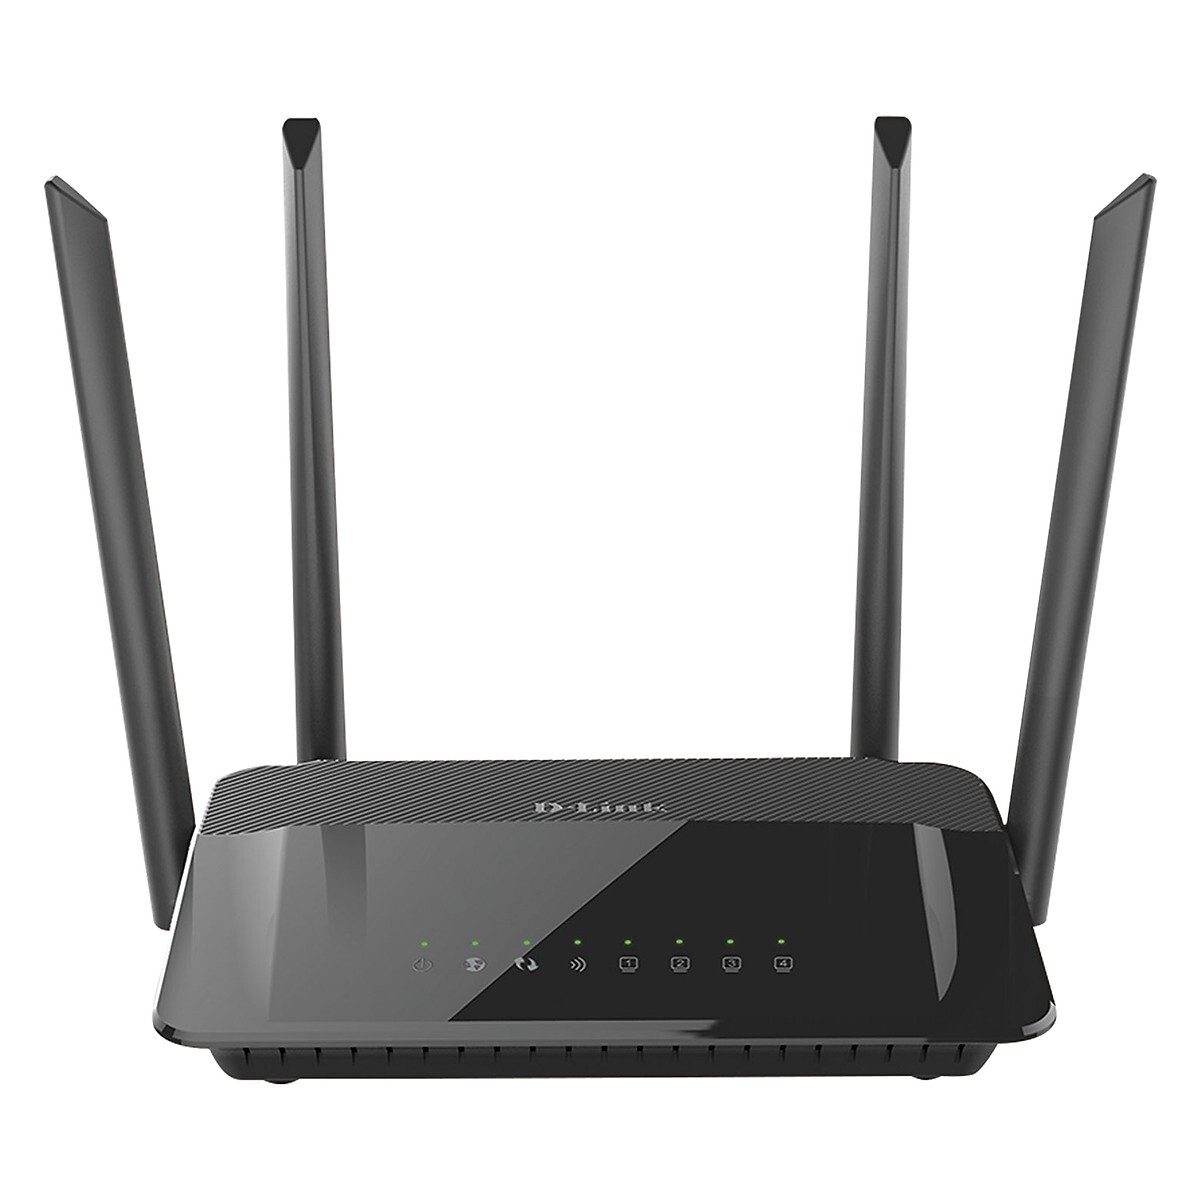 Router - Bộ phát wifi D-link DIR-825+